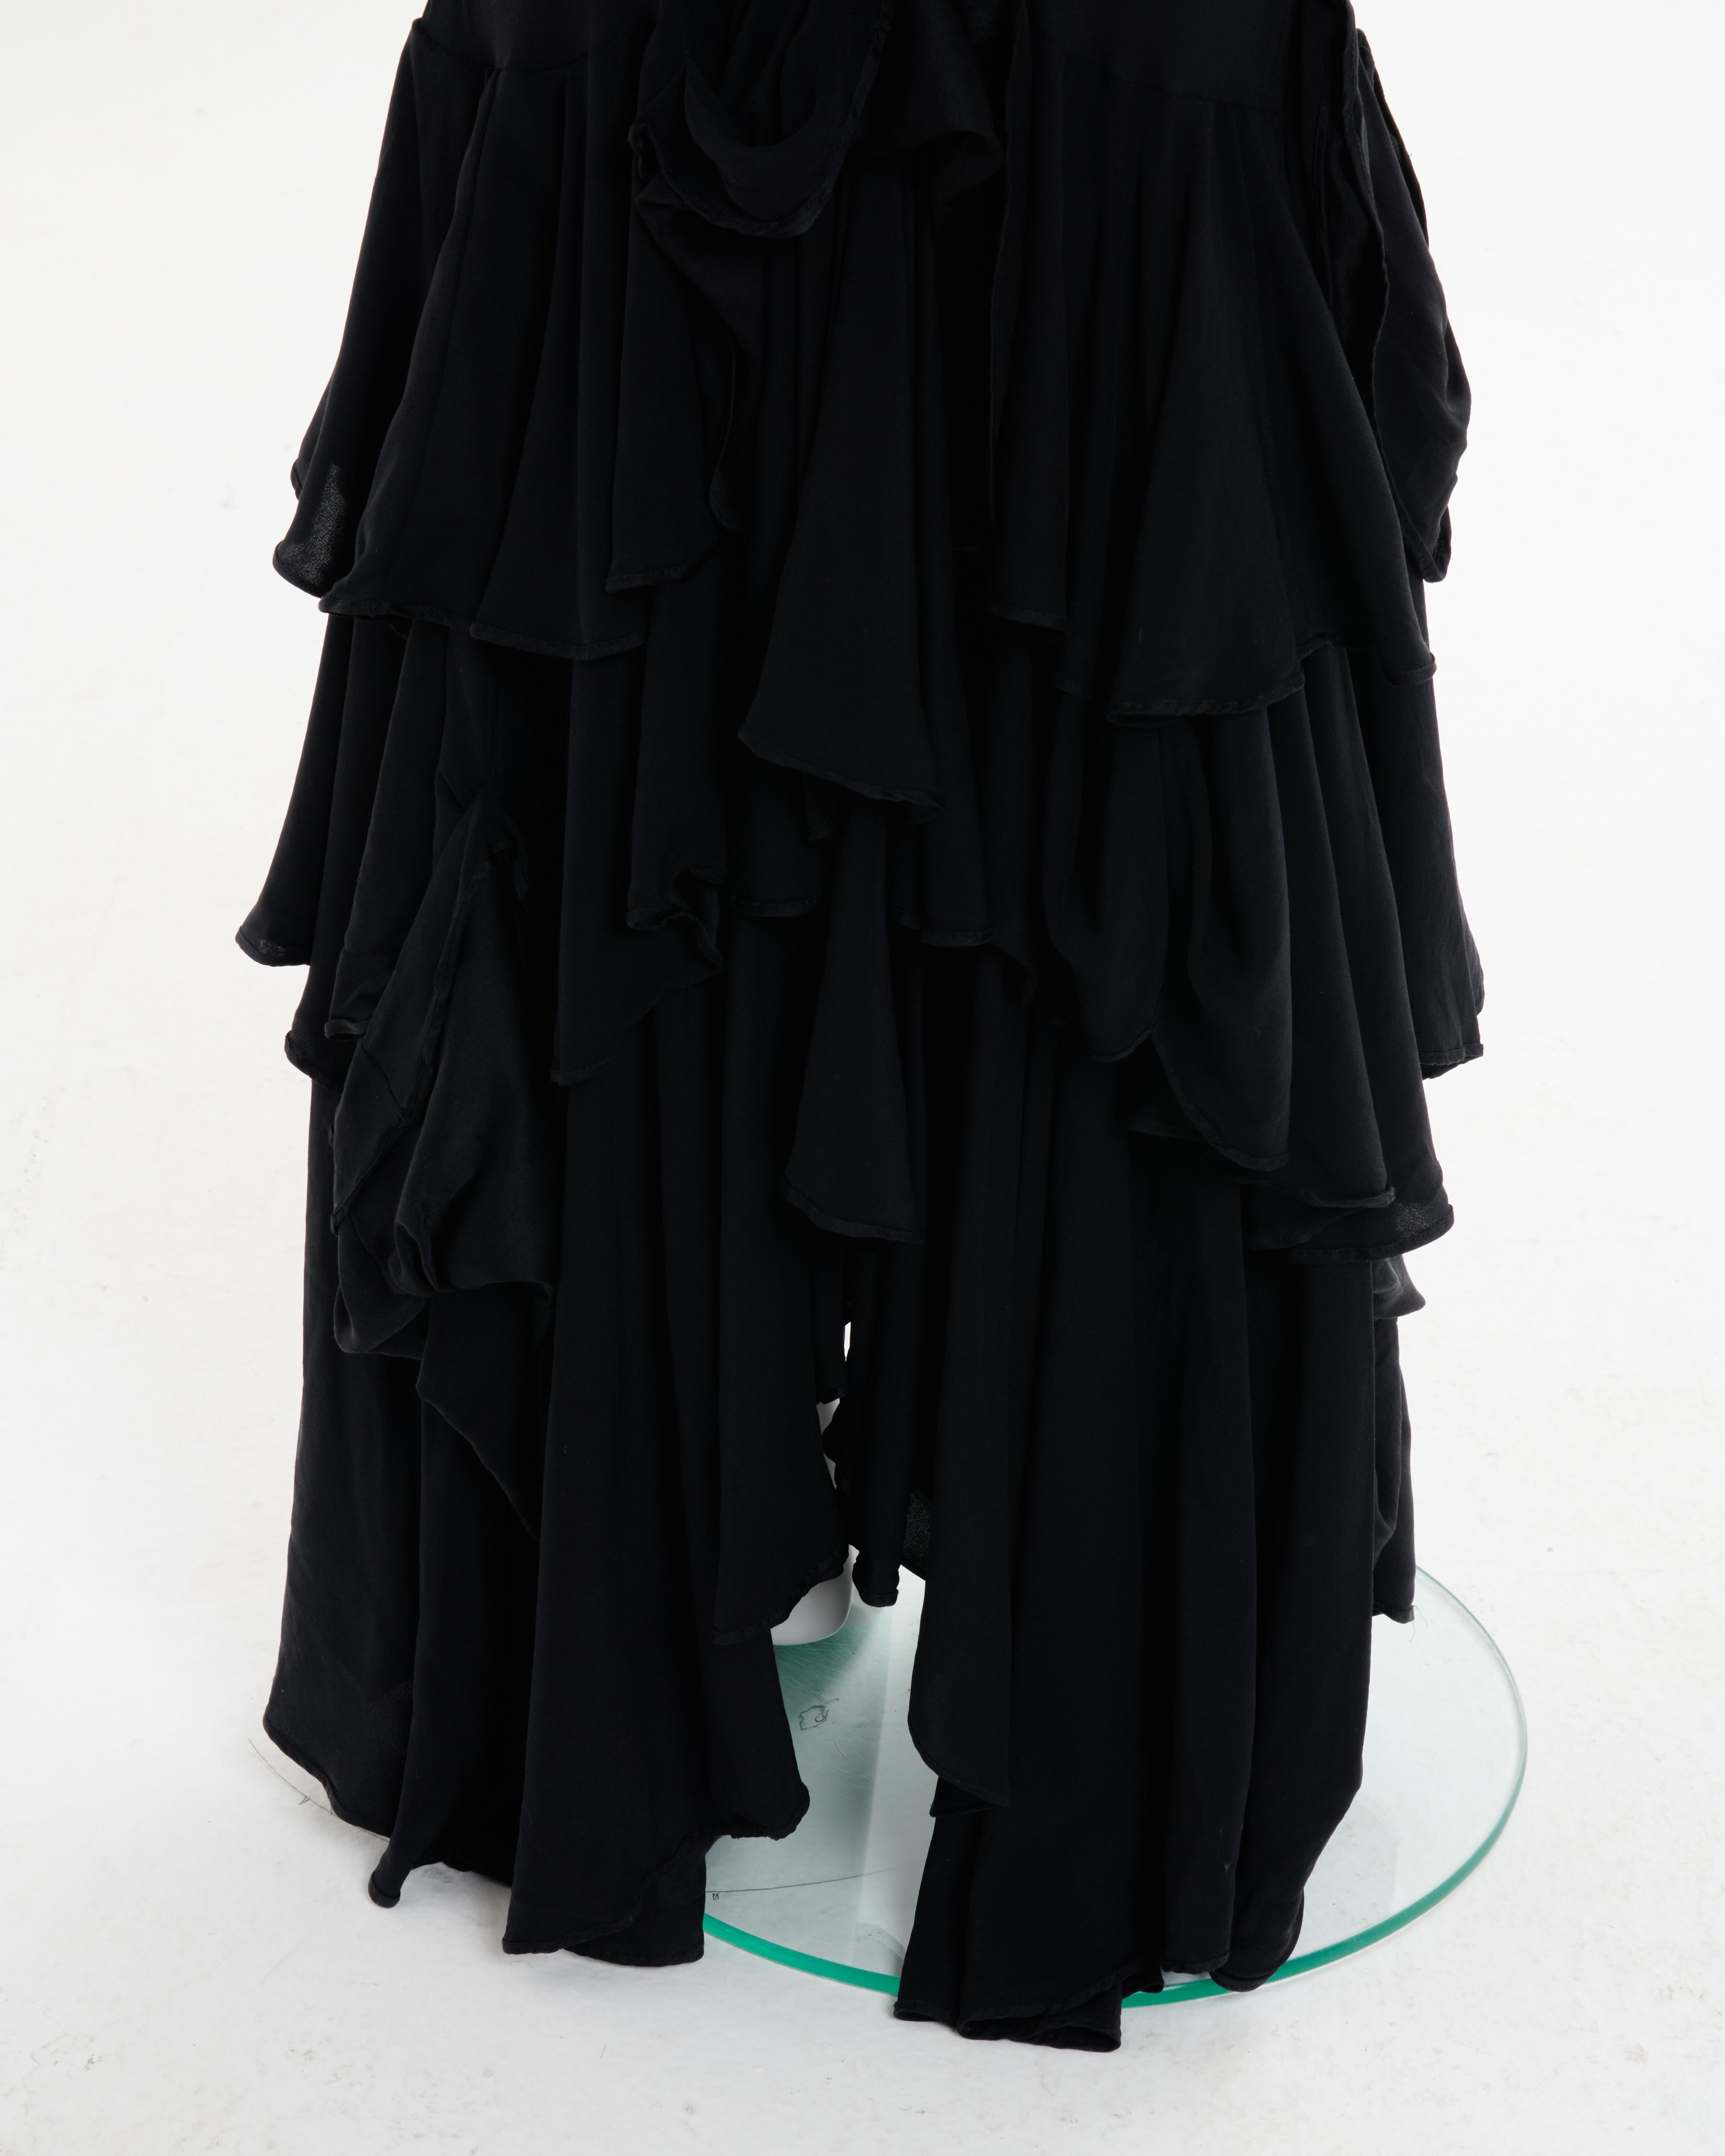 Christian Dior by John Galliano F/W 2006 Black silk bias-cut evening dress 10